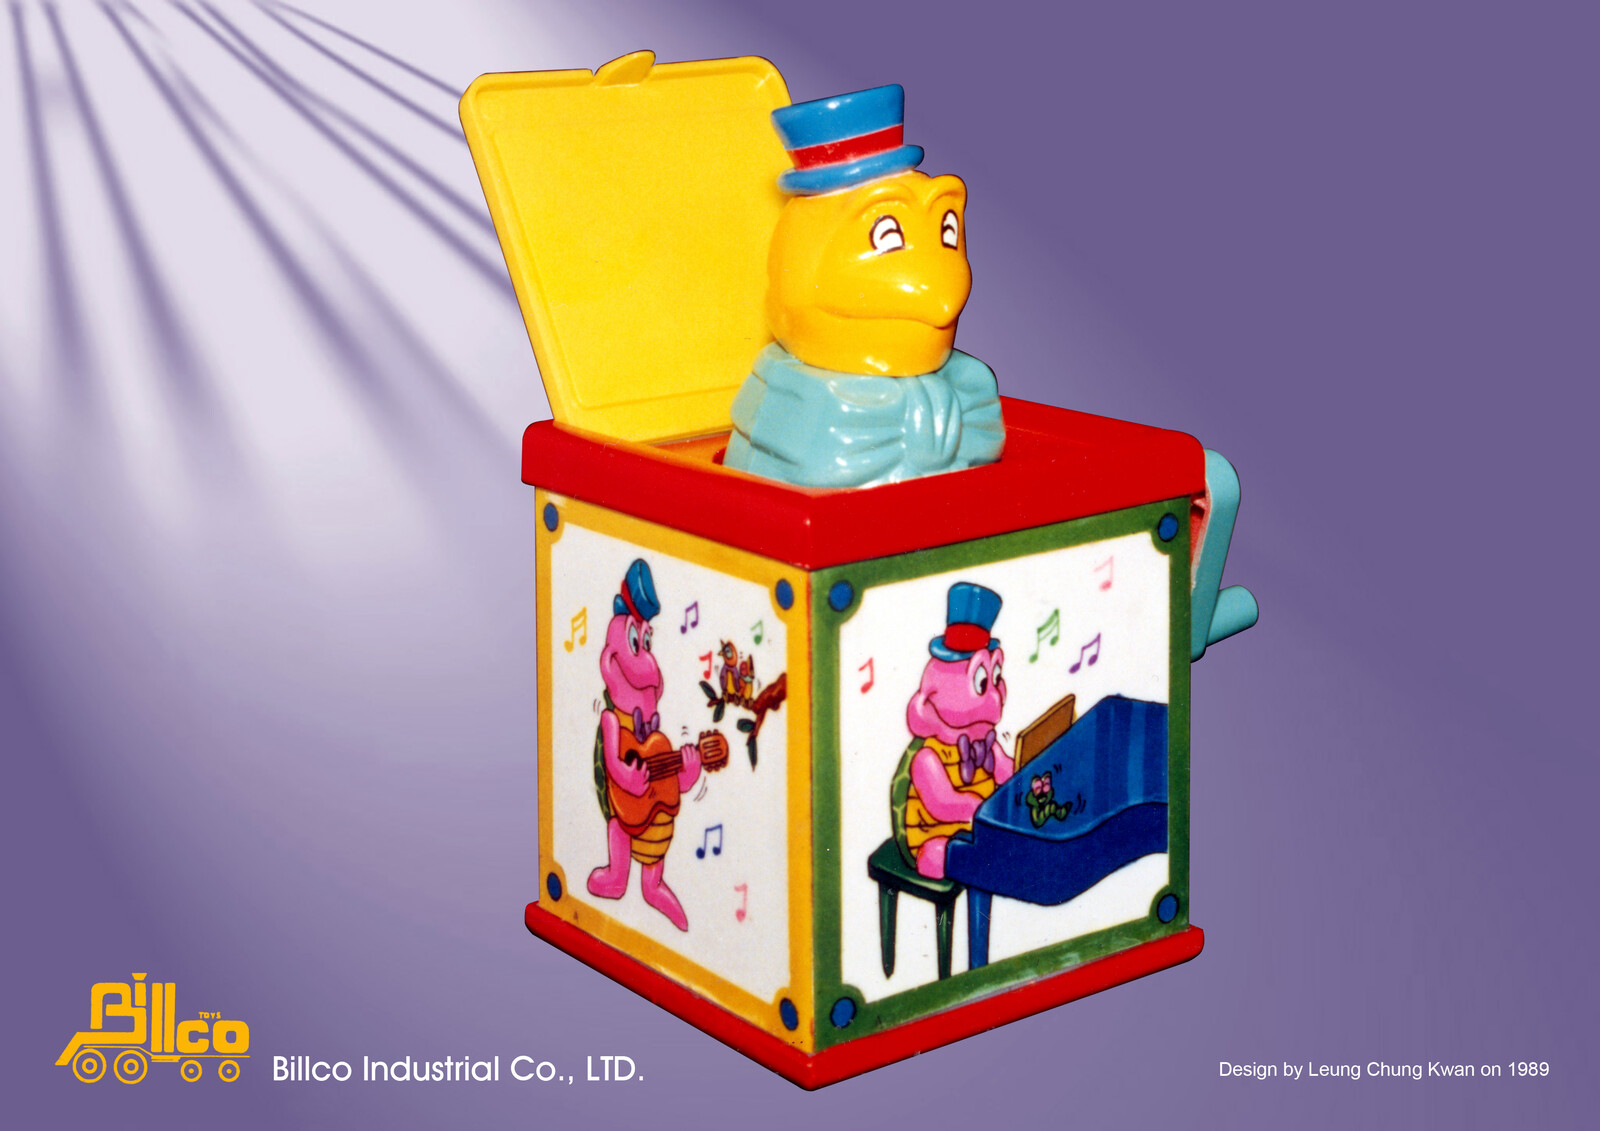 💎 POP-UP Music Box | Design by Leung Chung Kwan on 1989 💎
Brand Name︰BILLCO | Client︰Billco industrial Co., Ltd.